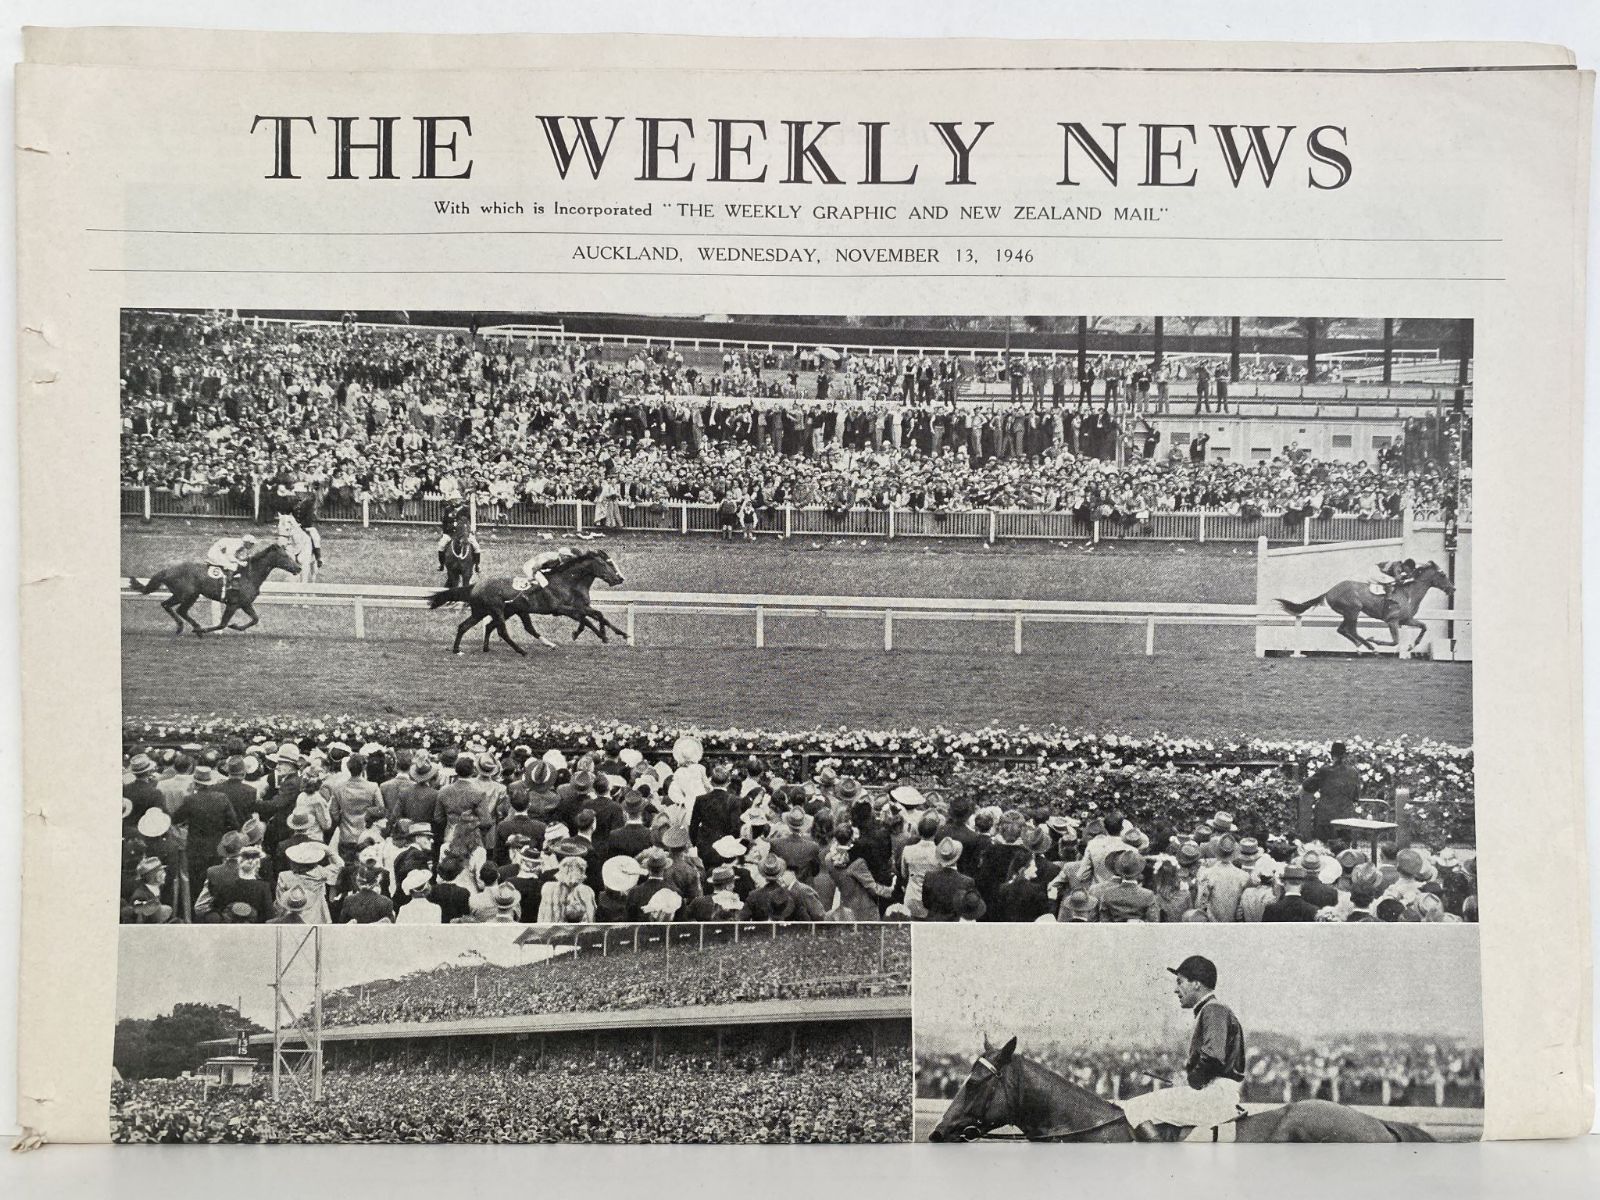 OLD NEWSPAPER: The Weekly News, 13 November 1946